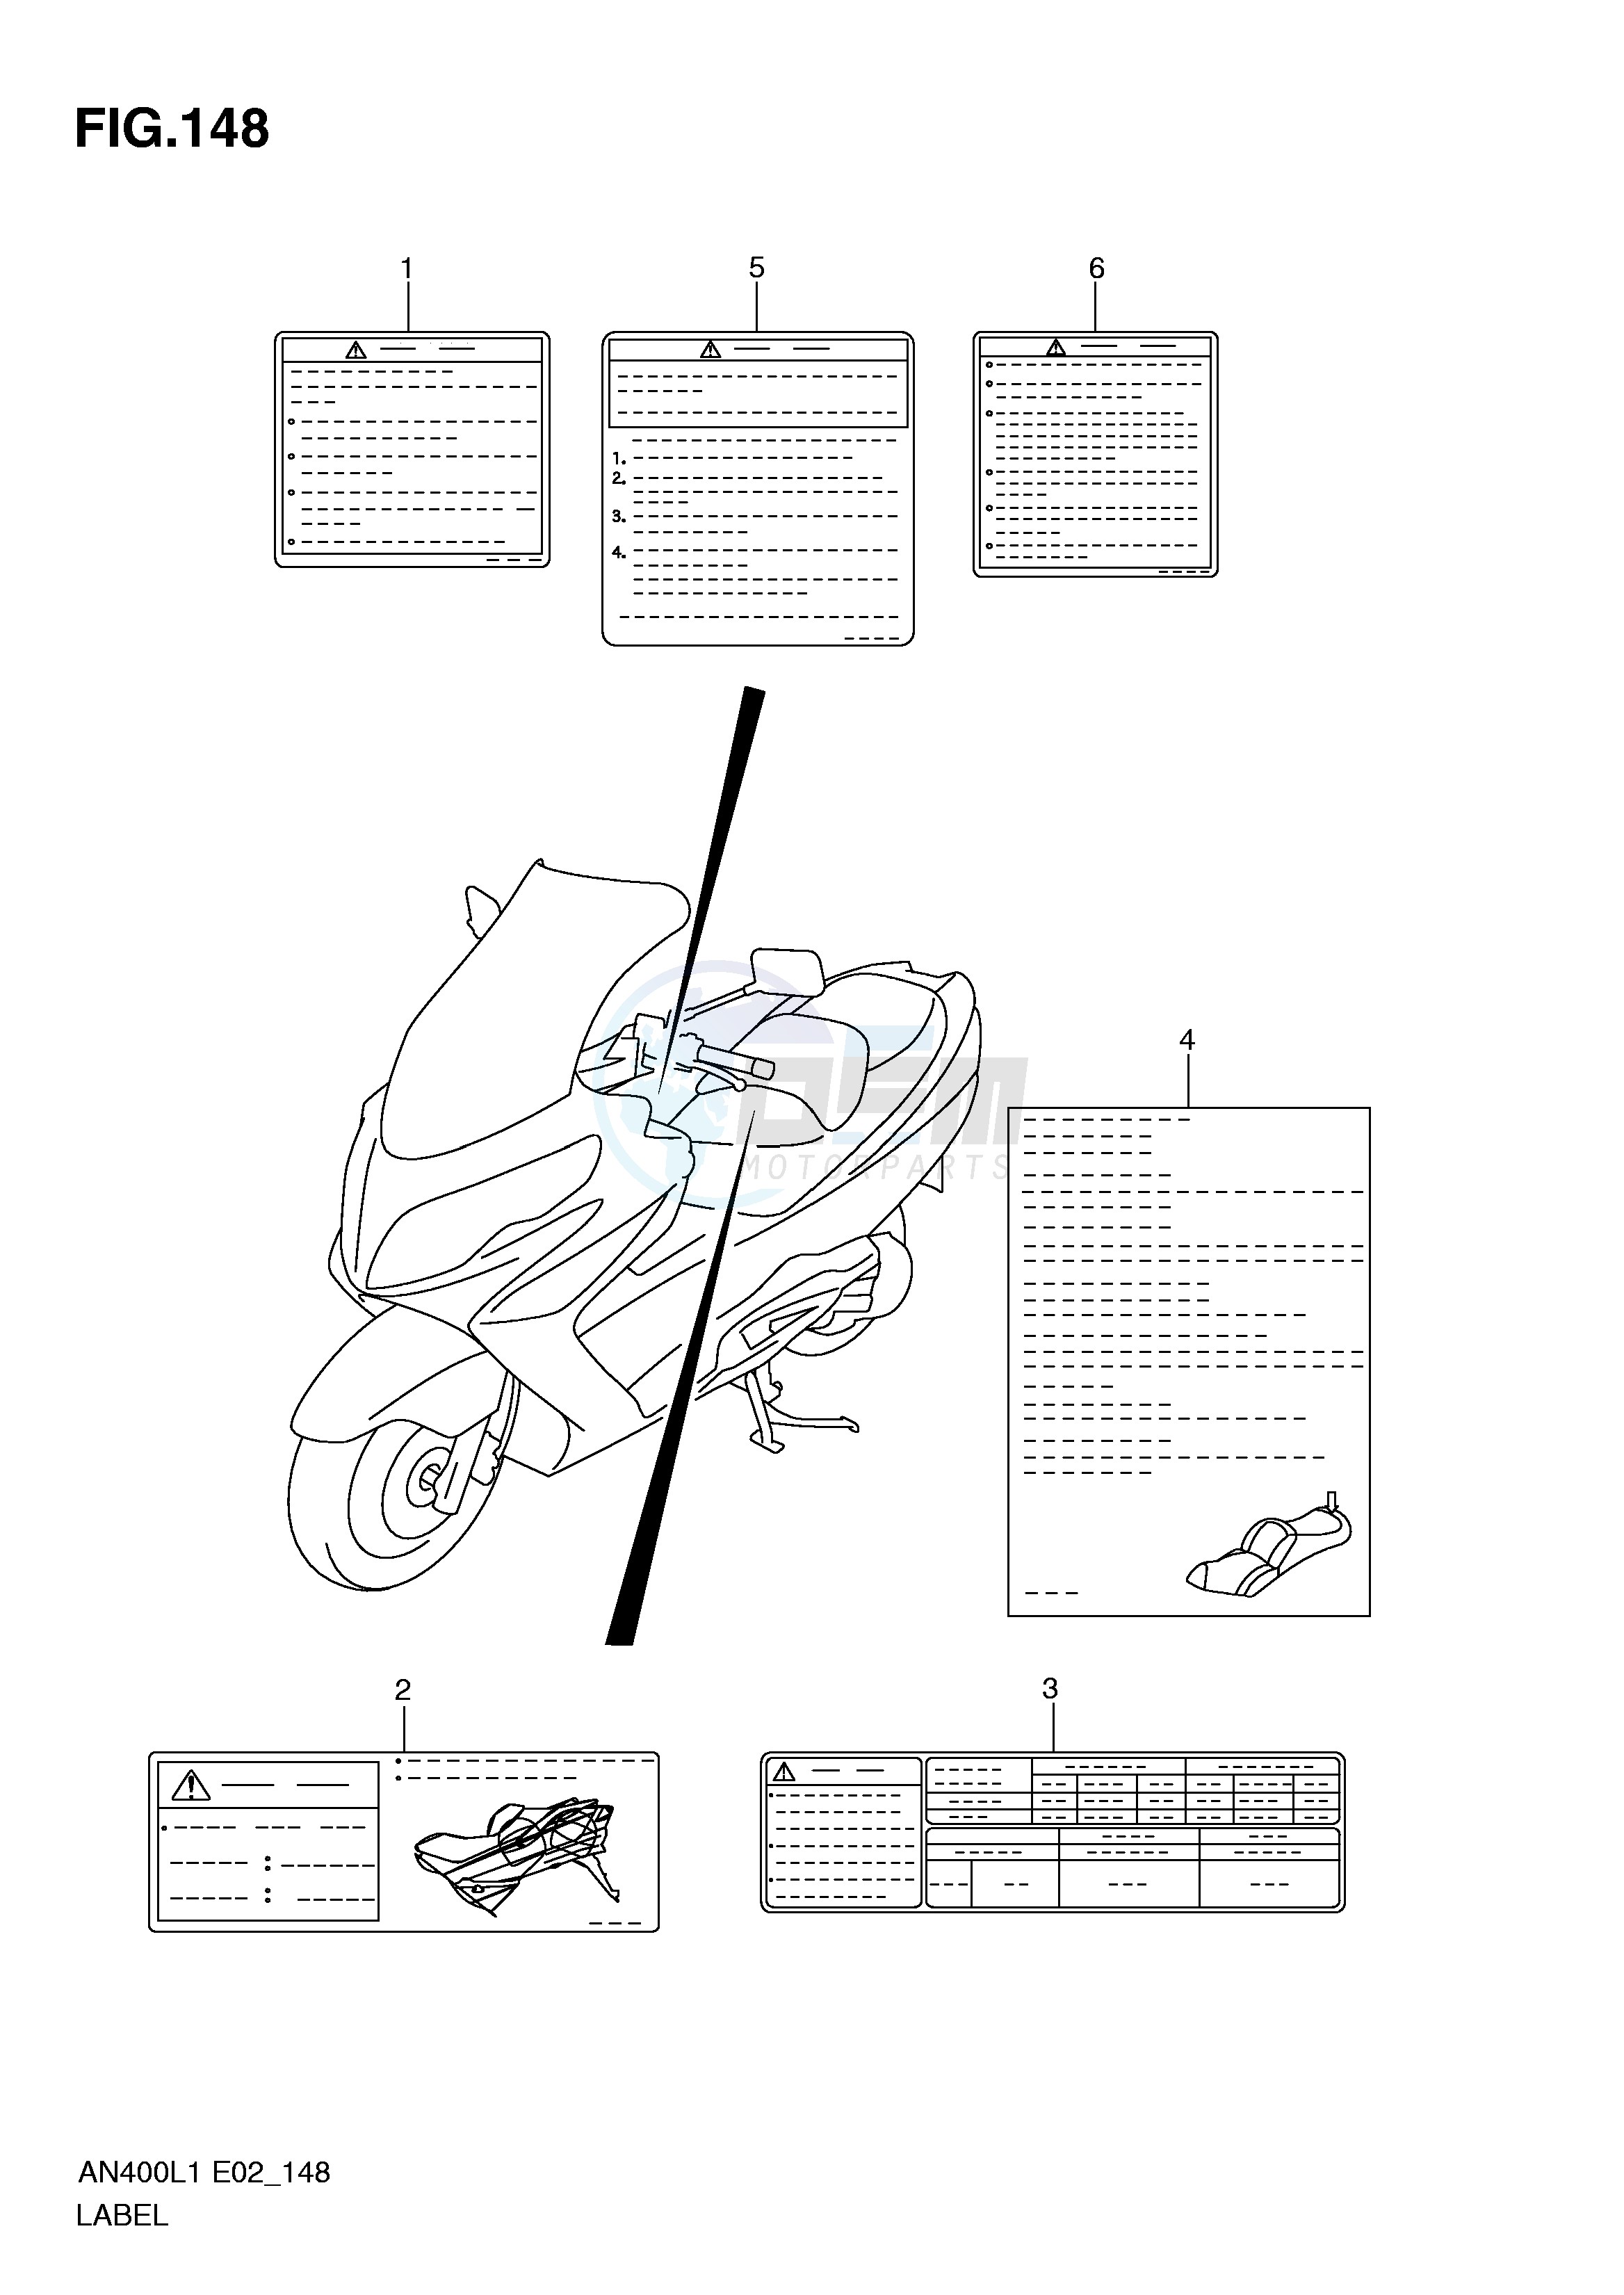 LABEL (AN400ZAL1 E51) blueprint